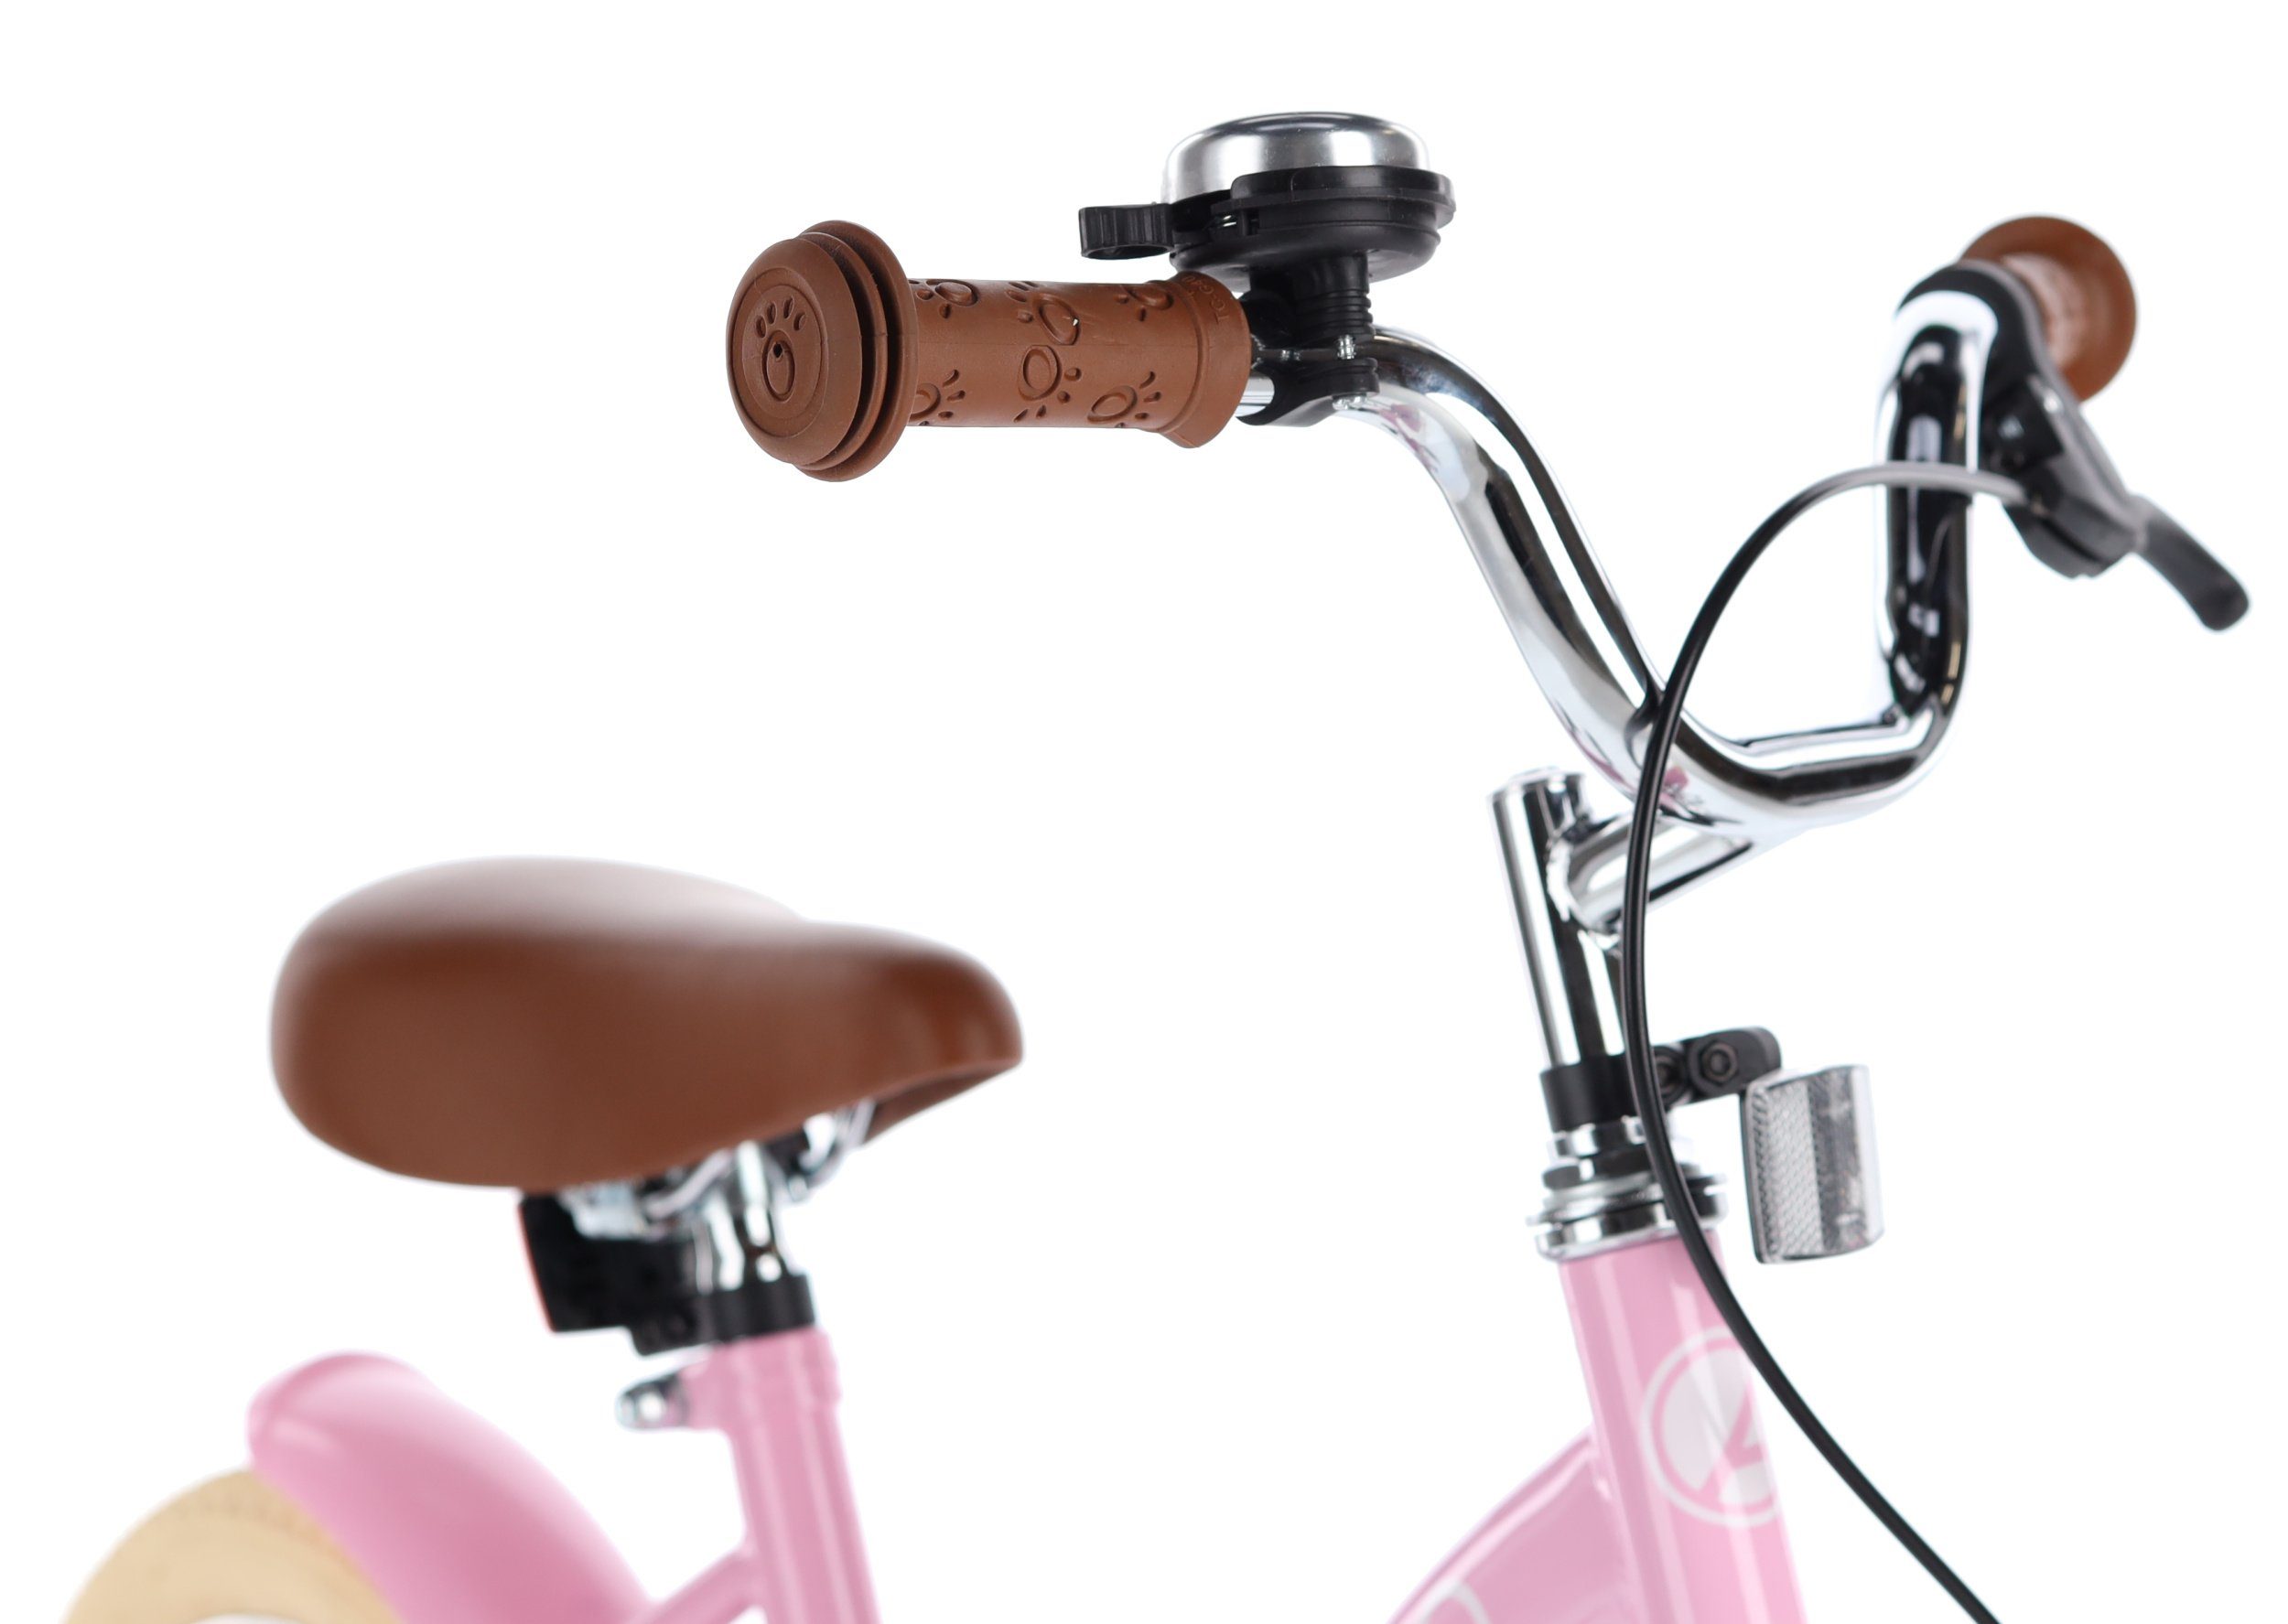 Mädchen AMIGO AMIGO Rücktrittbremse Fahrräder Zoll 14 Kinderfahrrad Triangle Kinderfahrrad Rosa